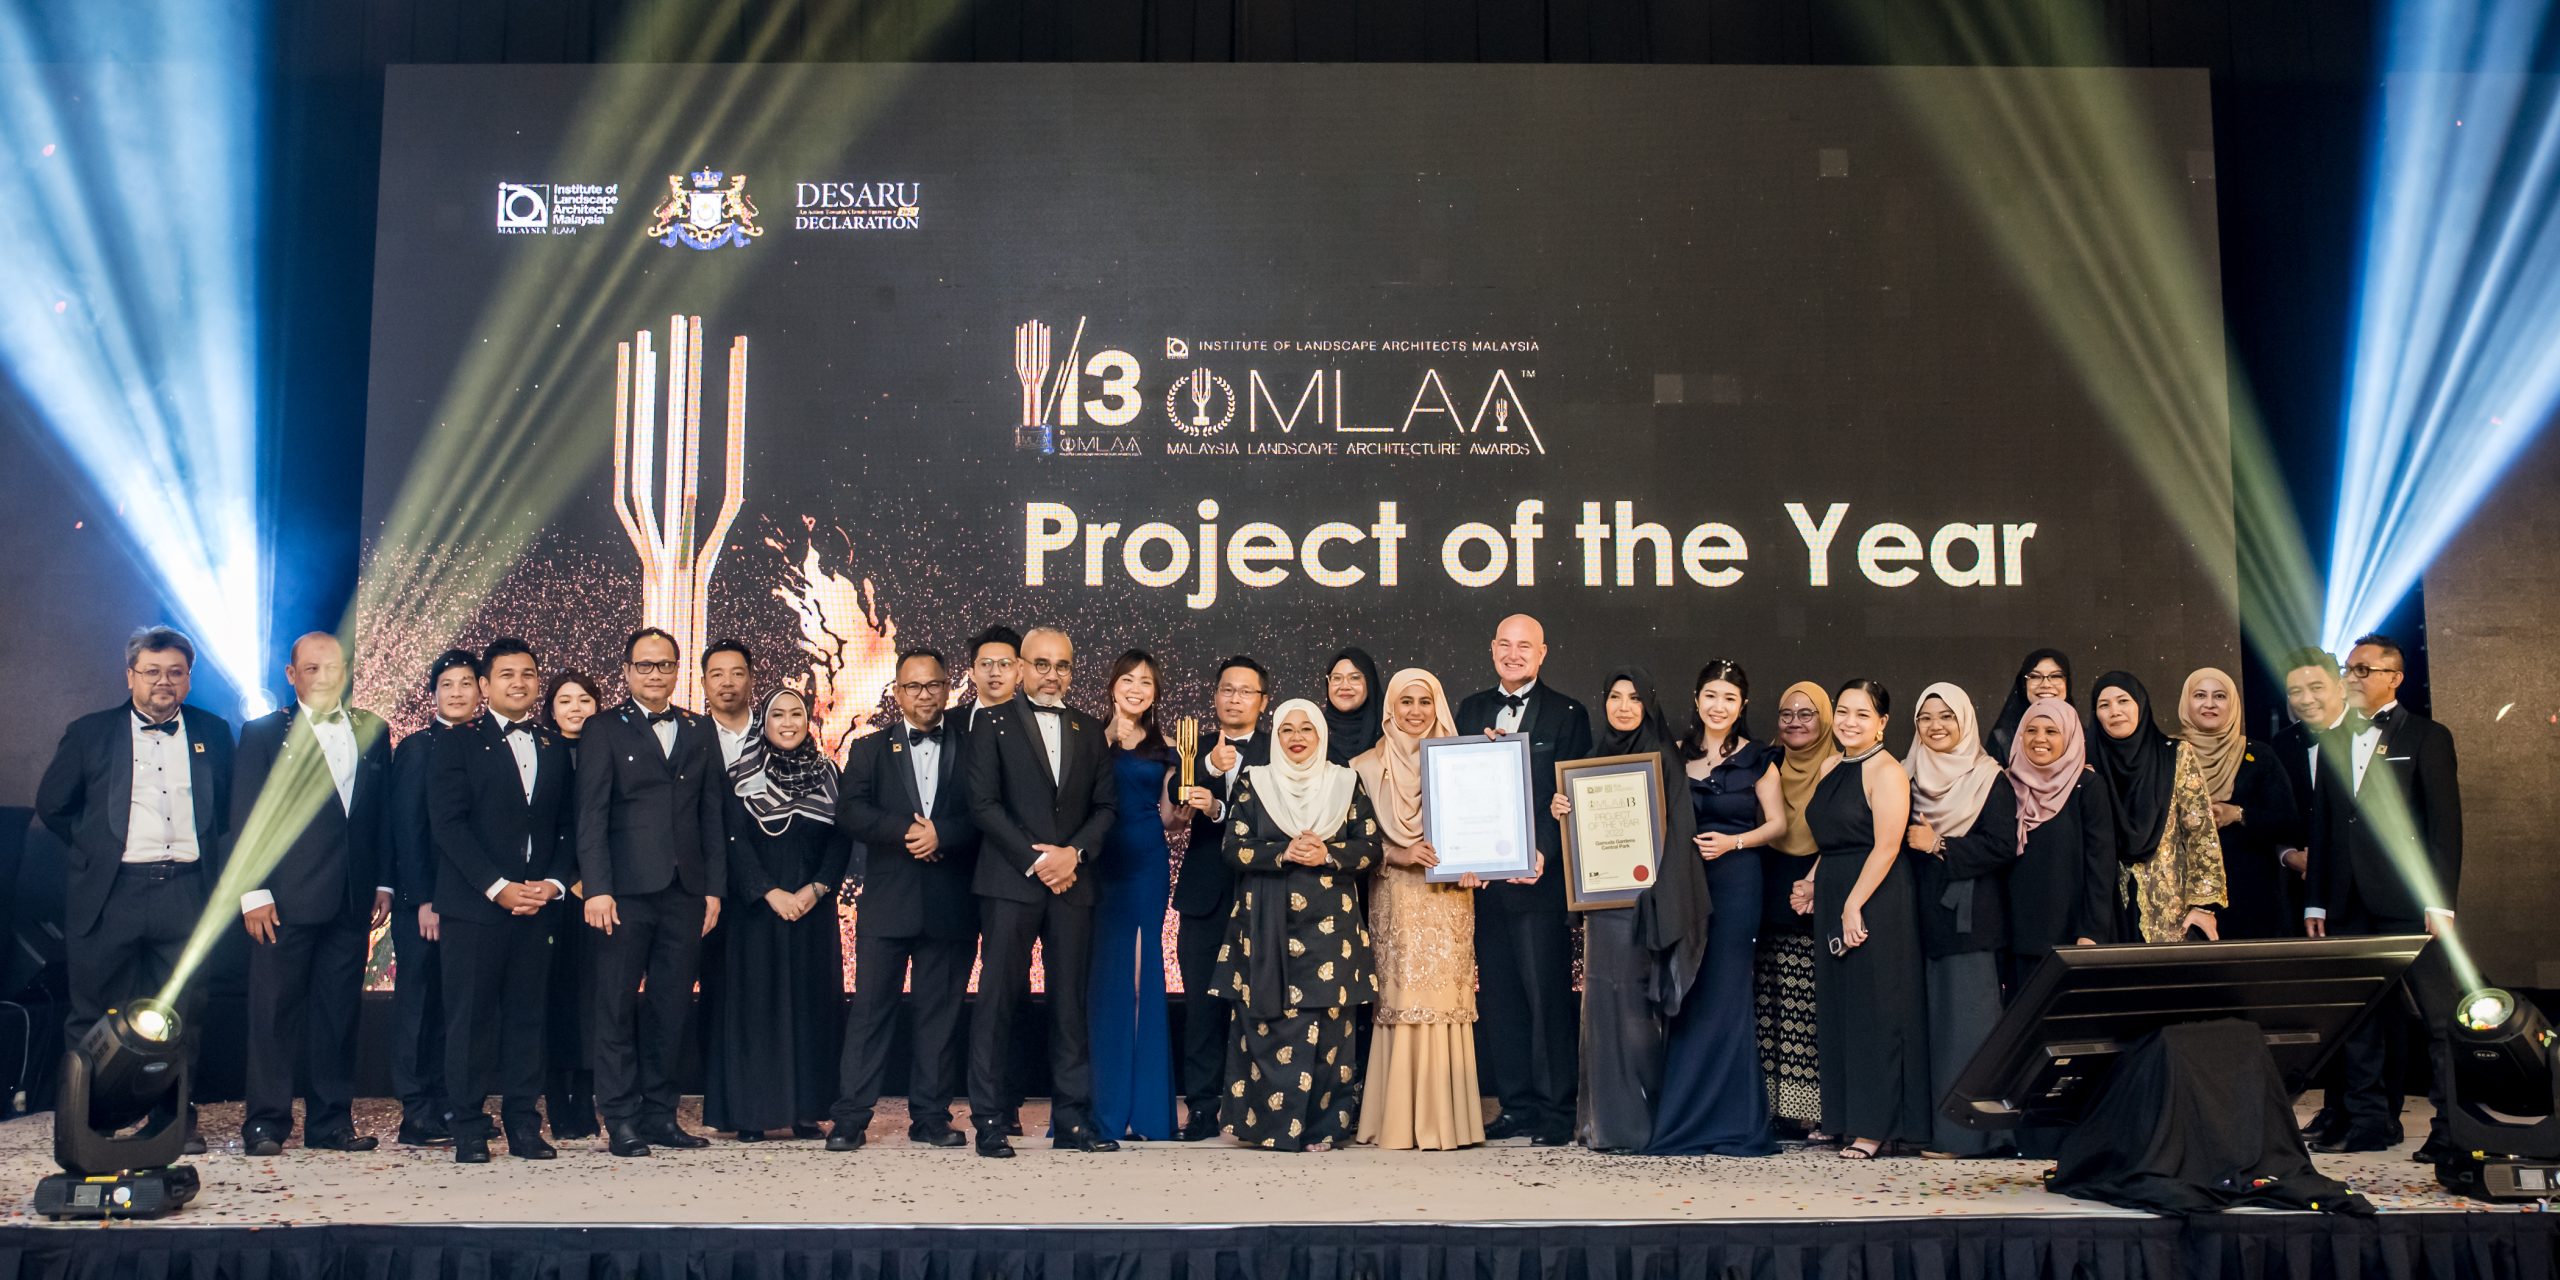 Gamuda Land bags nine awards at MLAA13